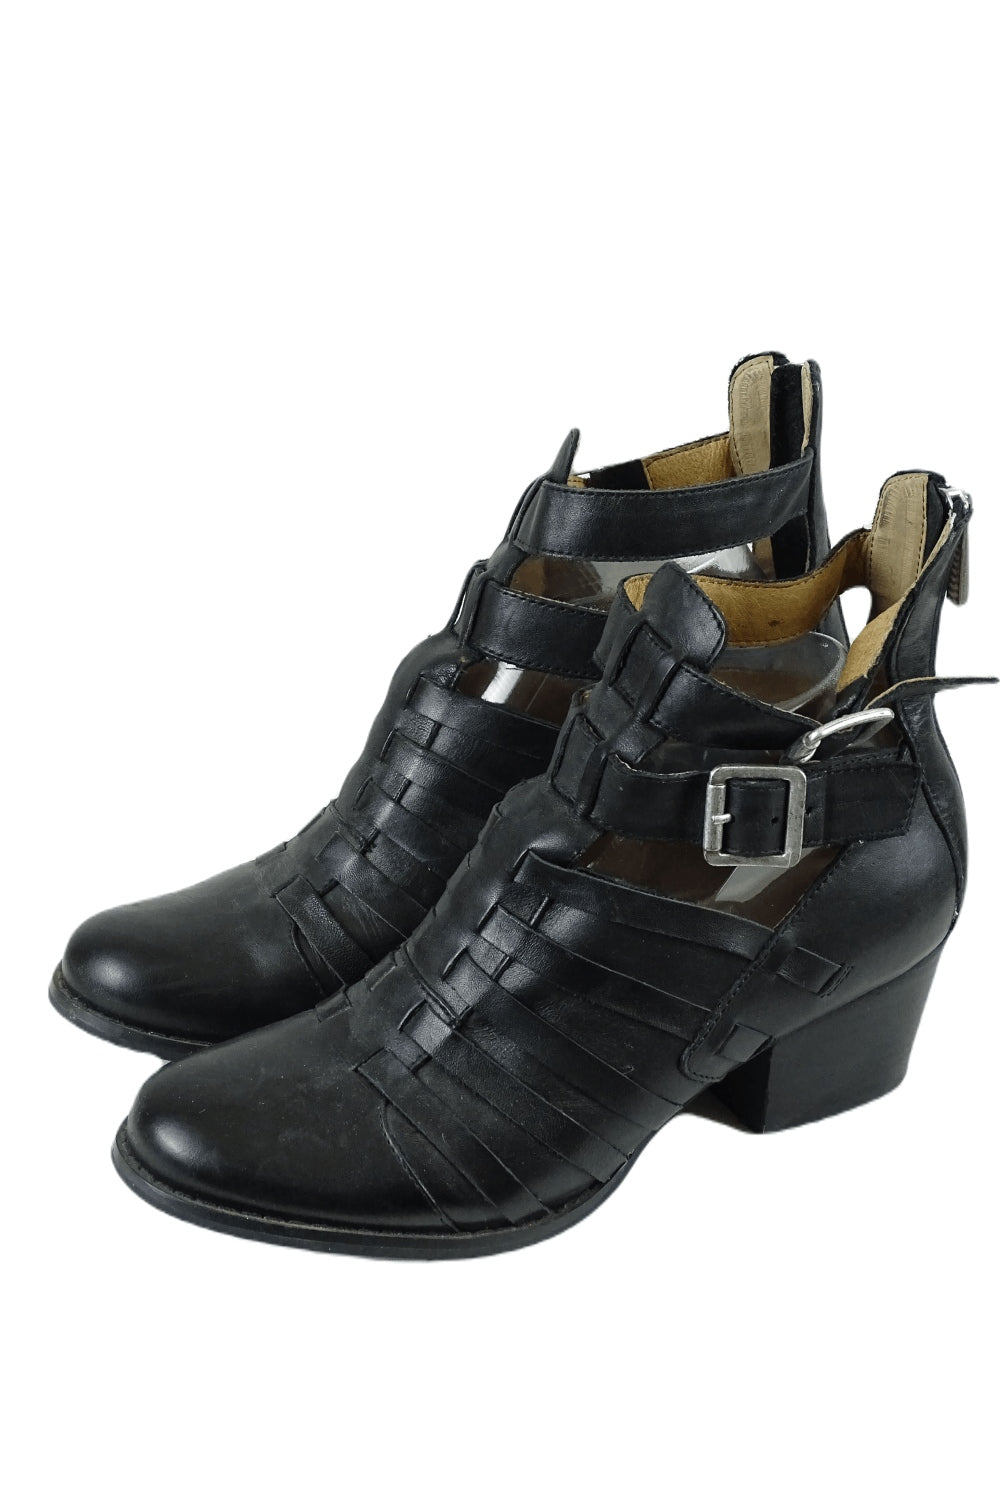 Wittner Black Sandals Boots 38